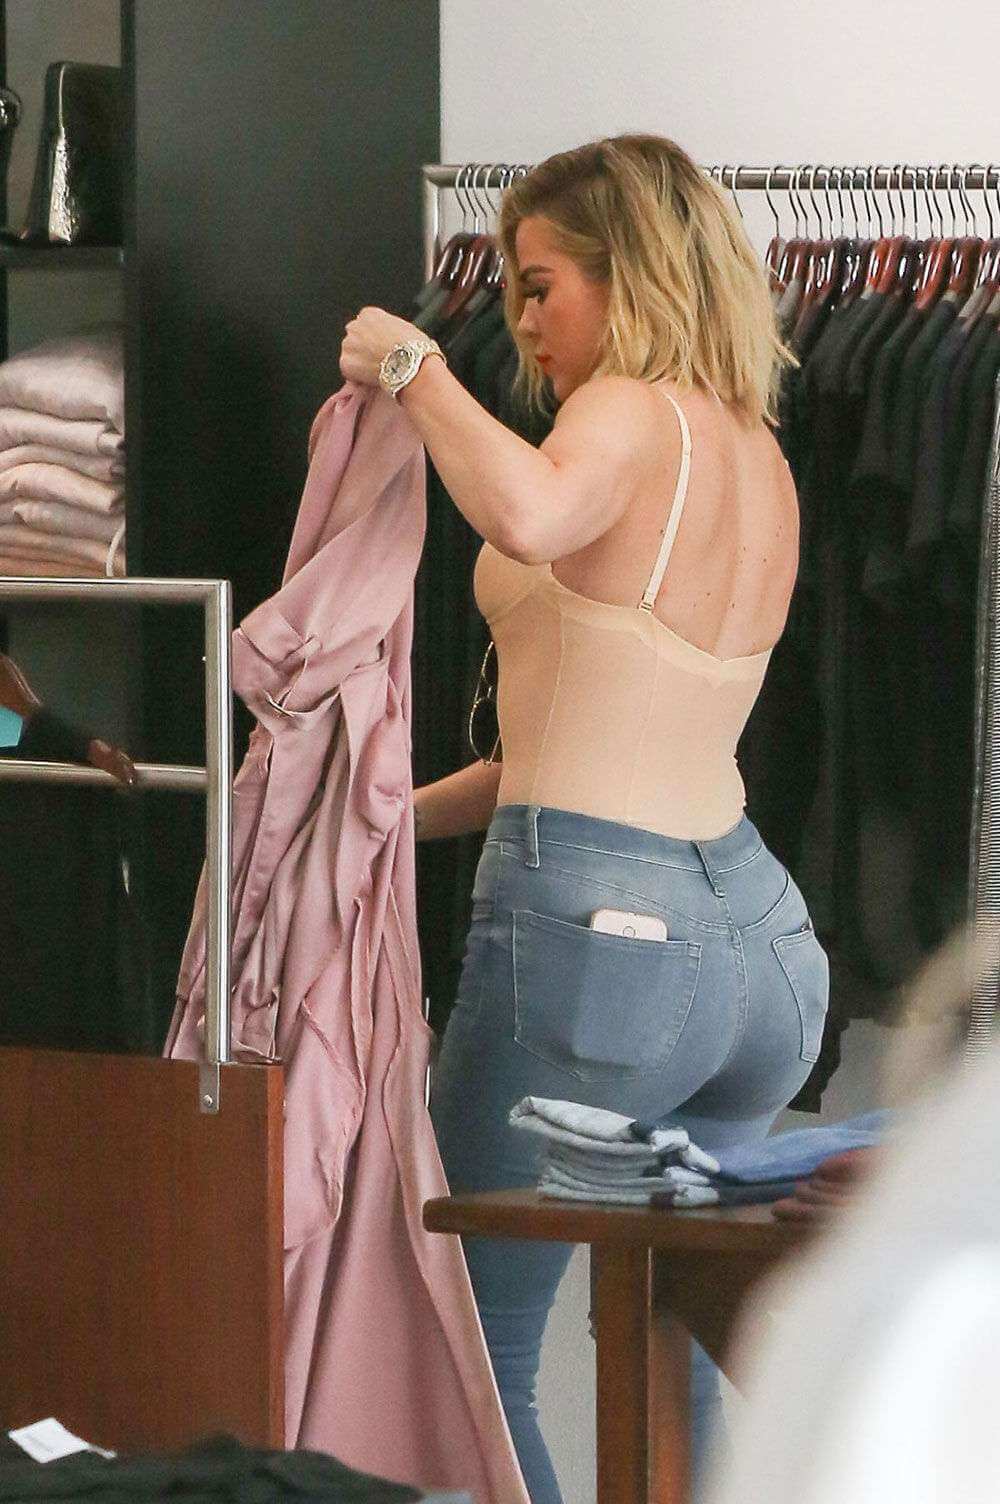 Khloe kardashian Shopping in Los Angeles